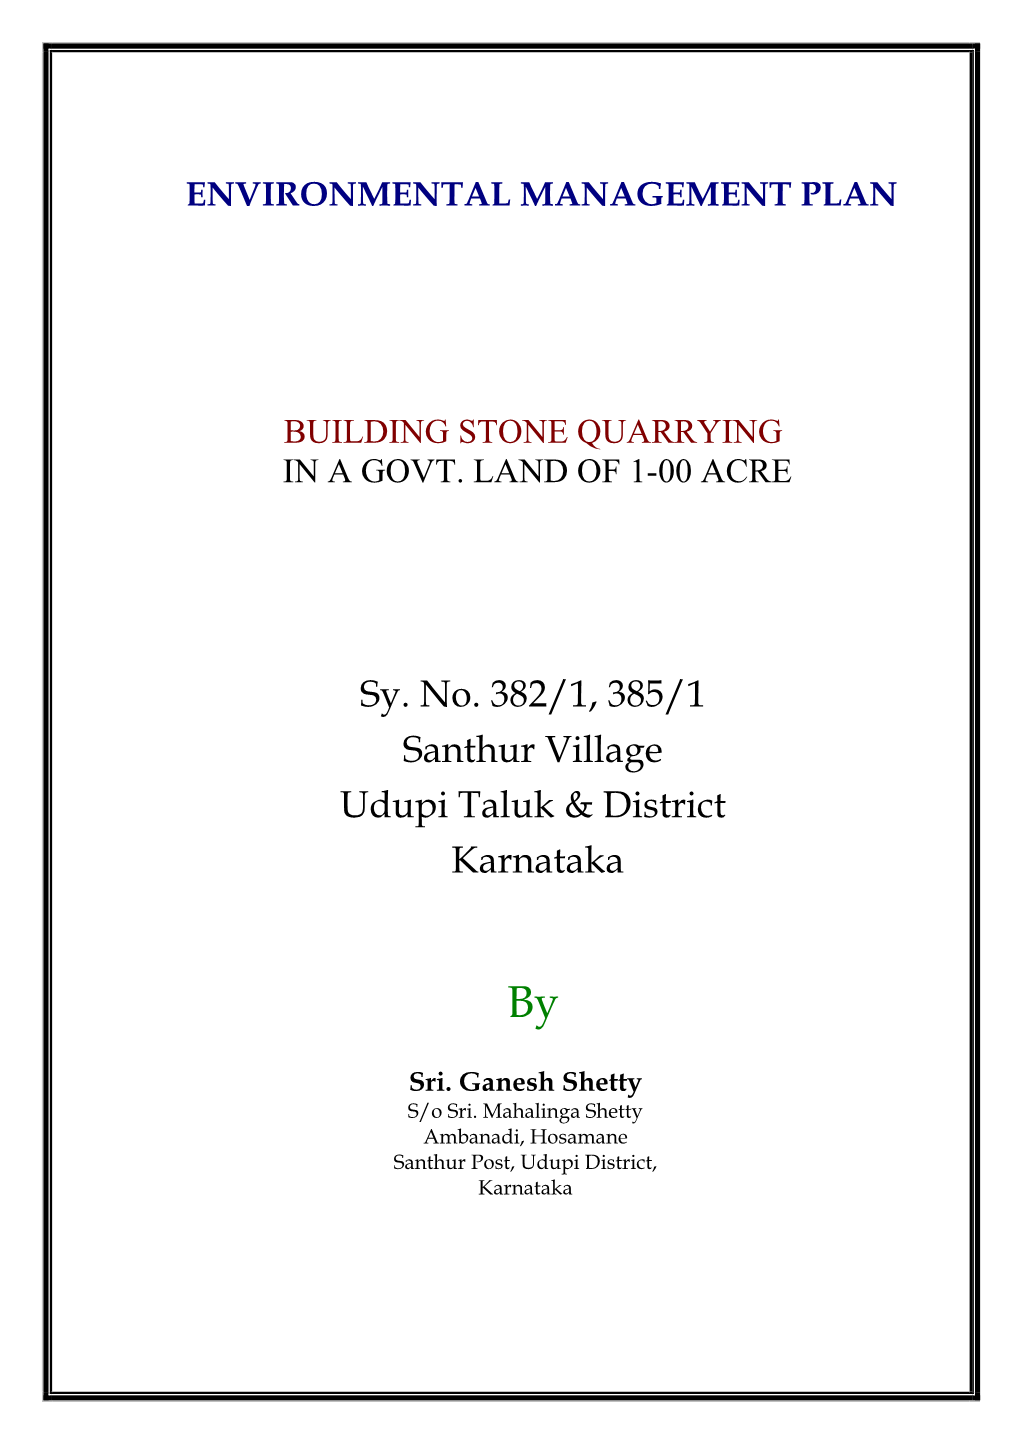 Sy. No. 382/1, 385/1 Santhur Village Udupi Taluk & District Karnataka